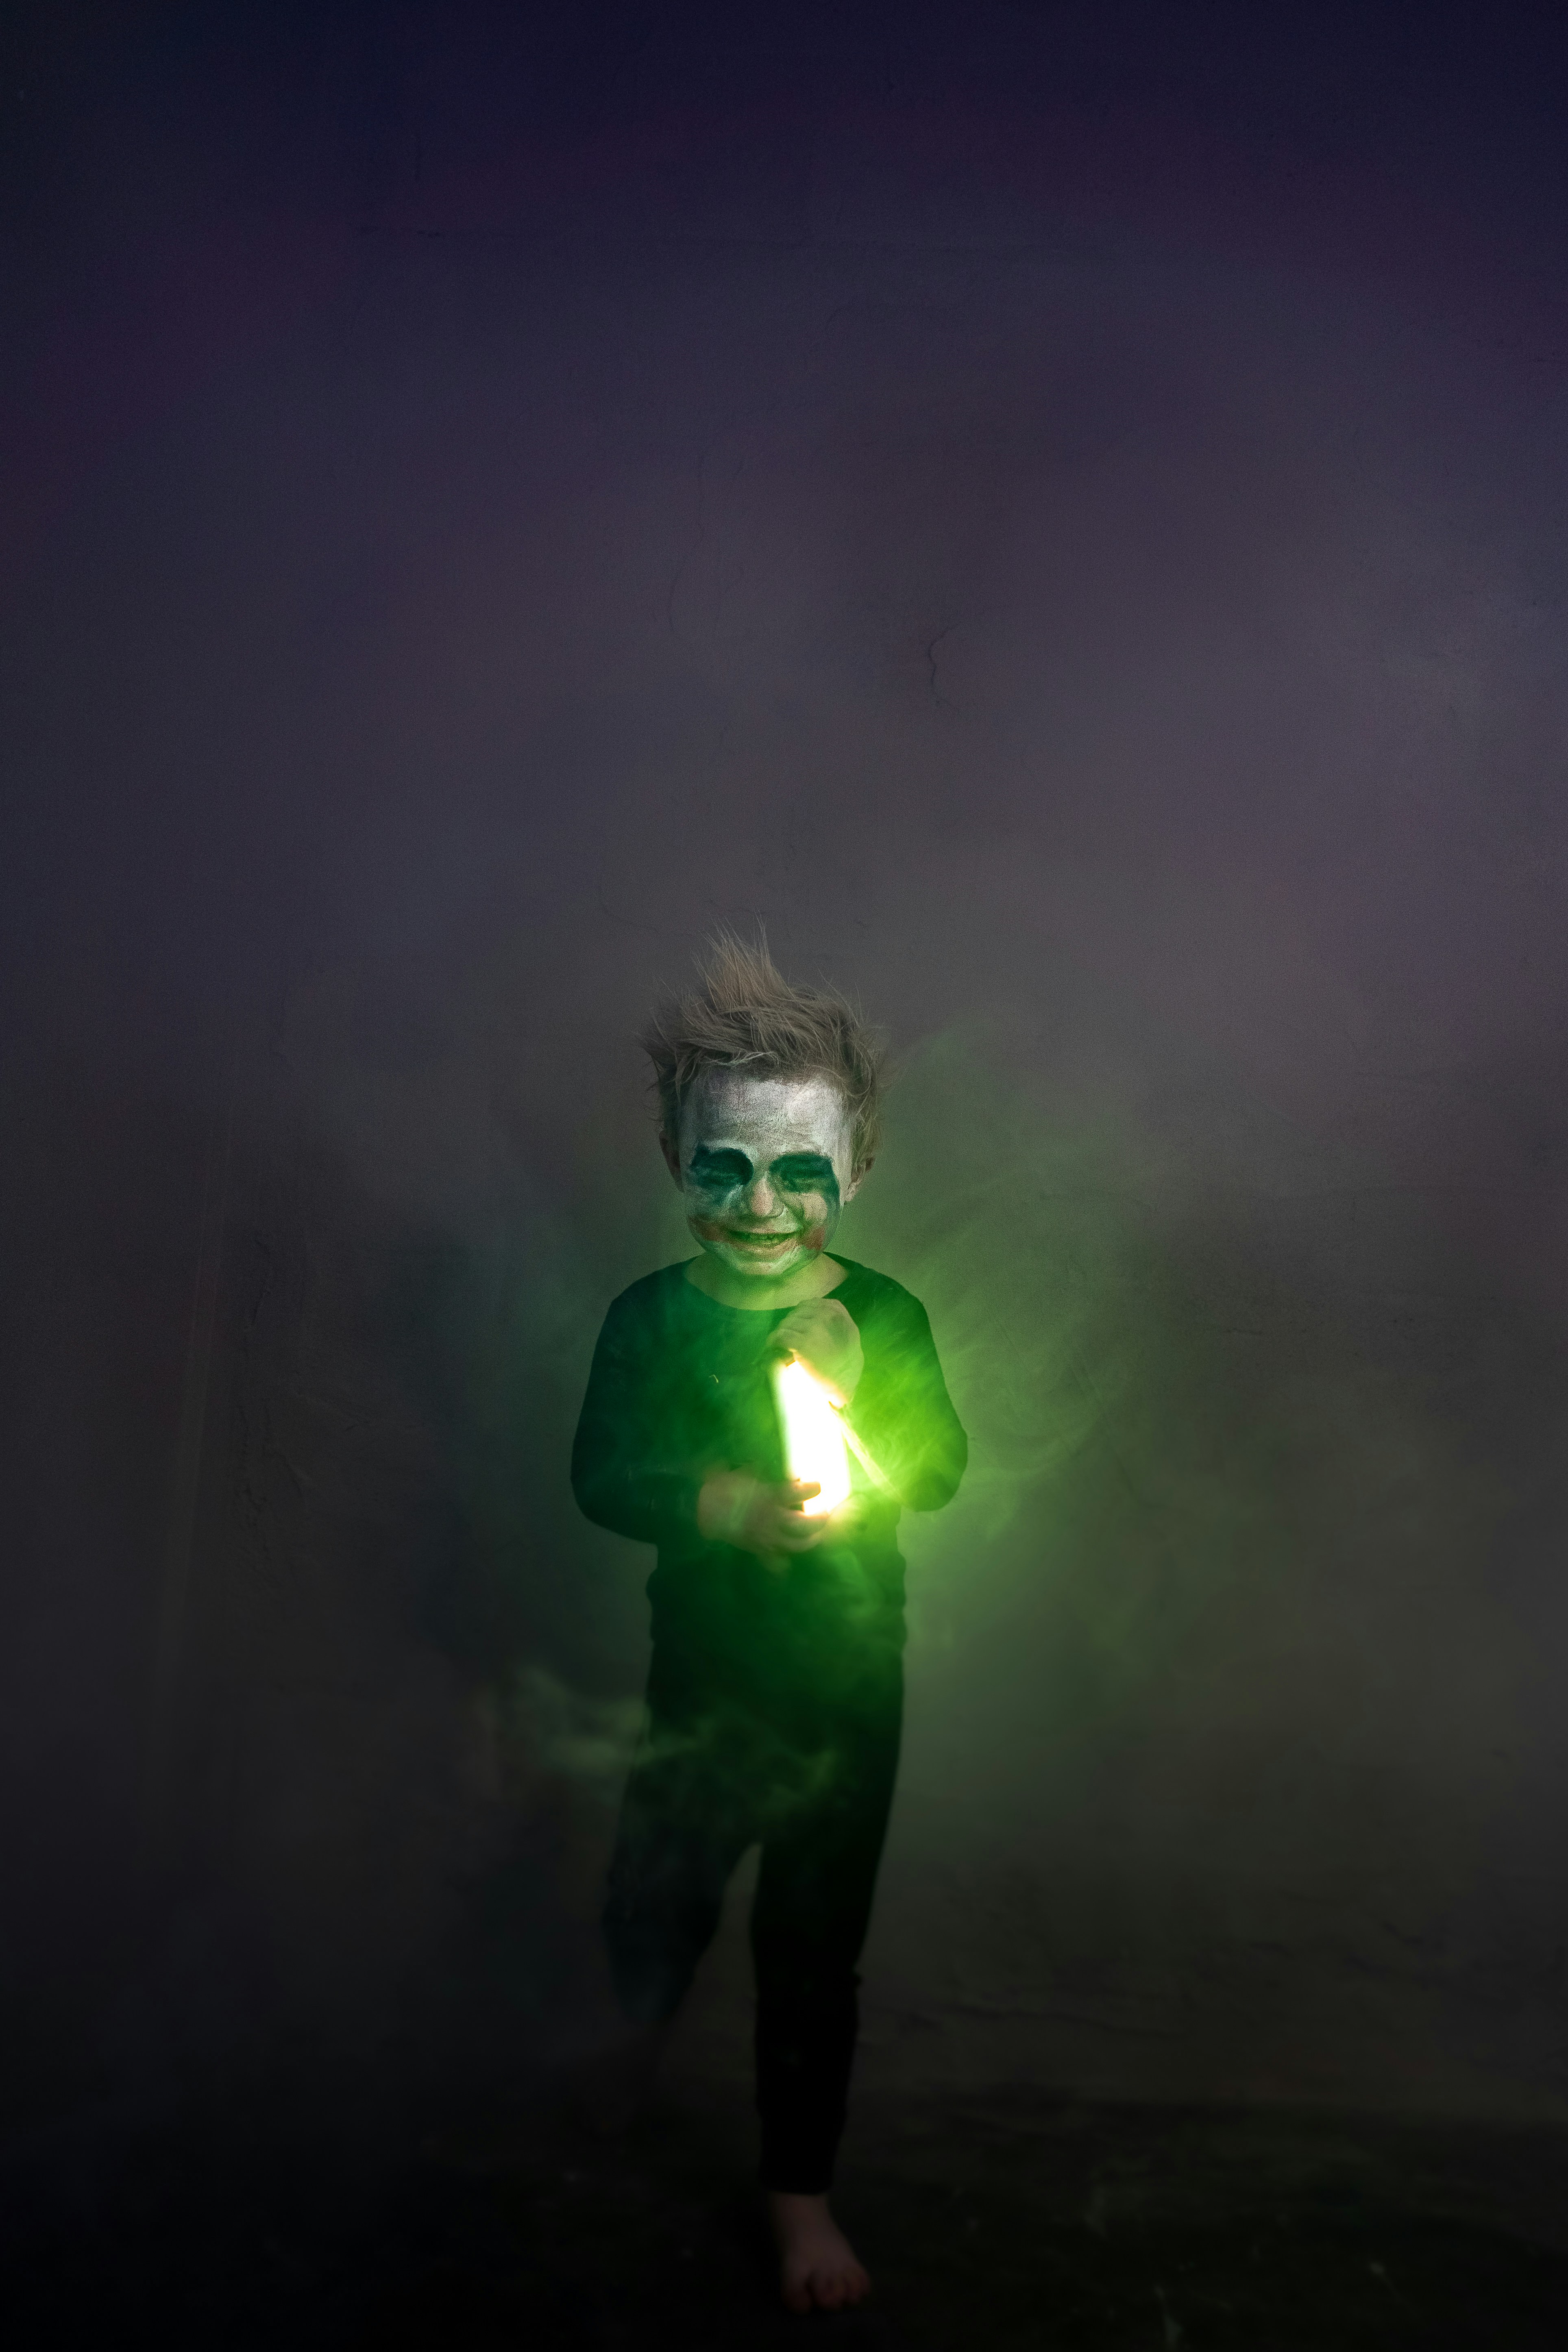 Baby Joker with Green Light